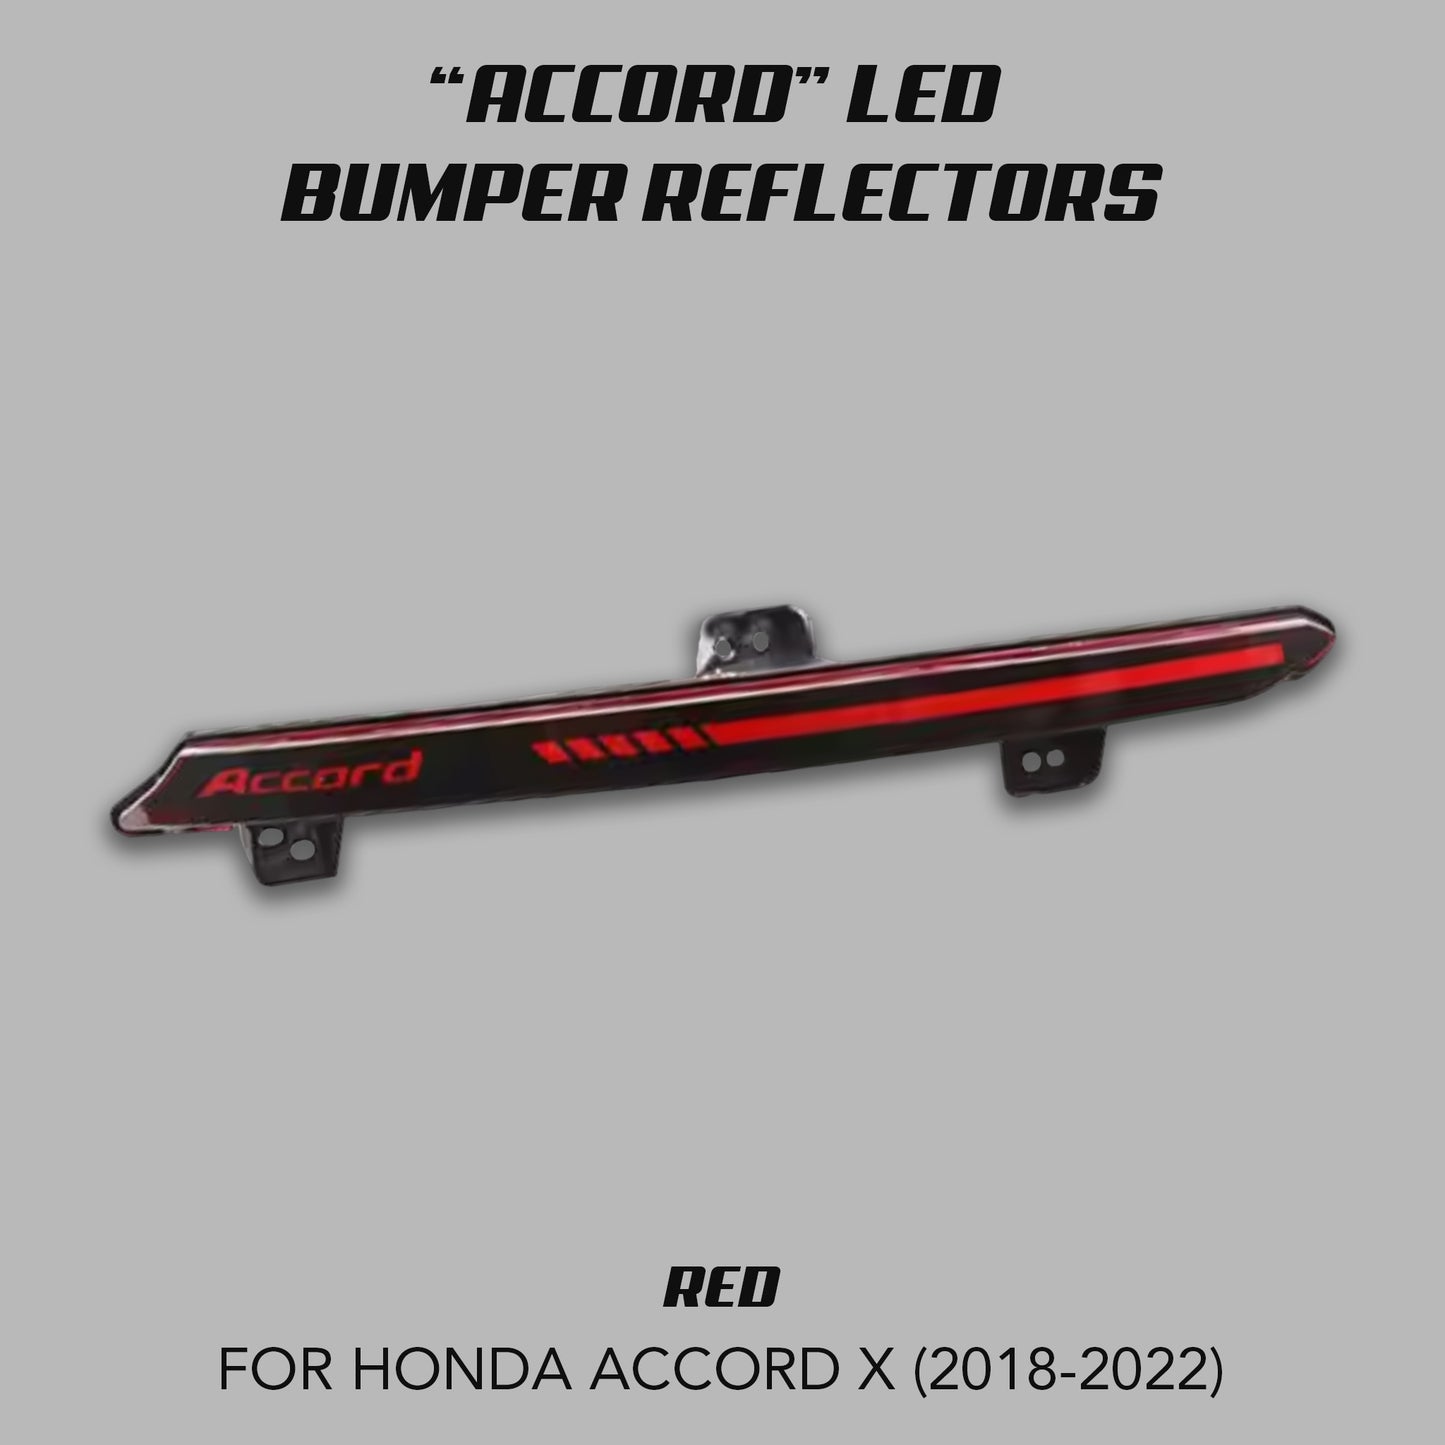 "ACCORD" LED BUMPER REFLECTOR LIGHTS